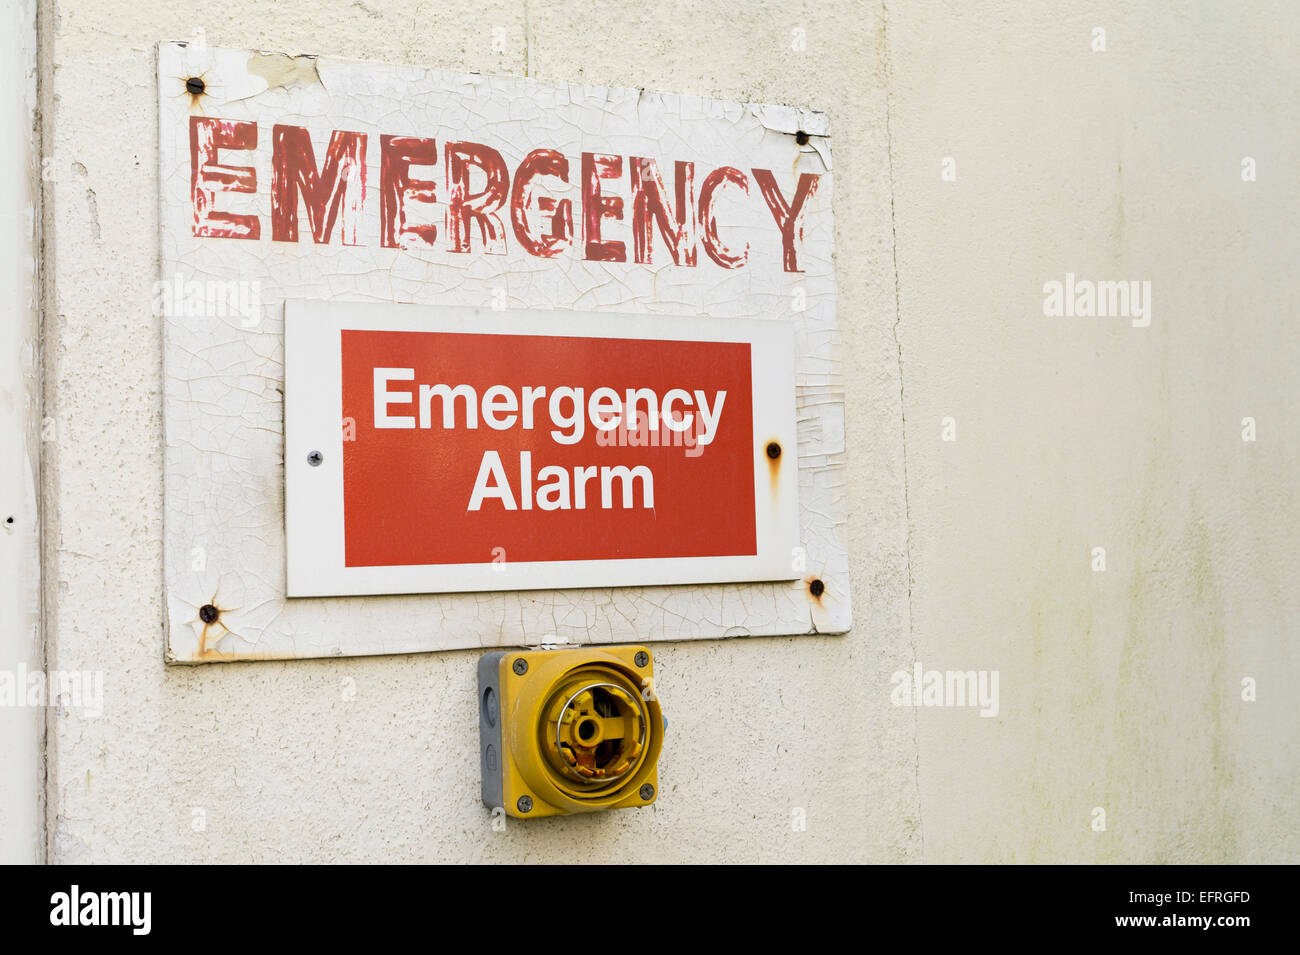 Broken emergency alarm at derelict premises Stock Photo